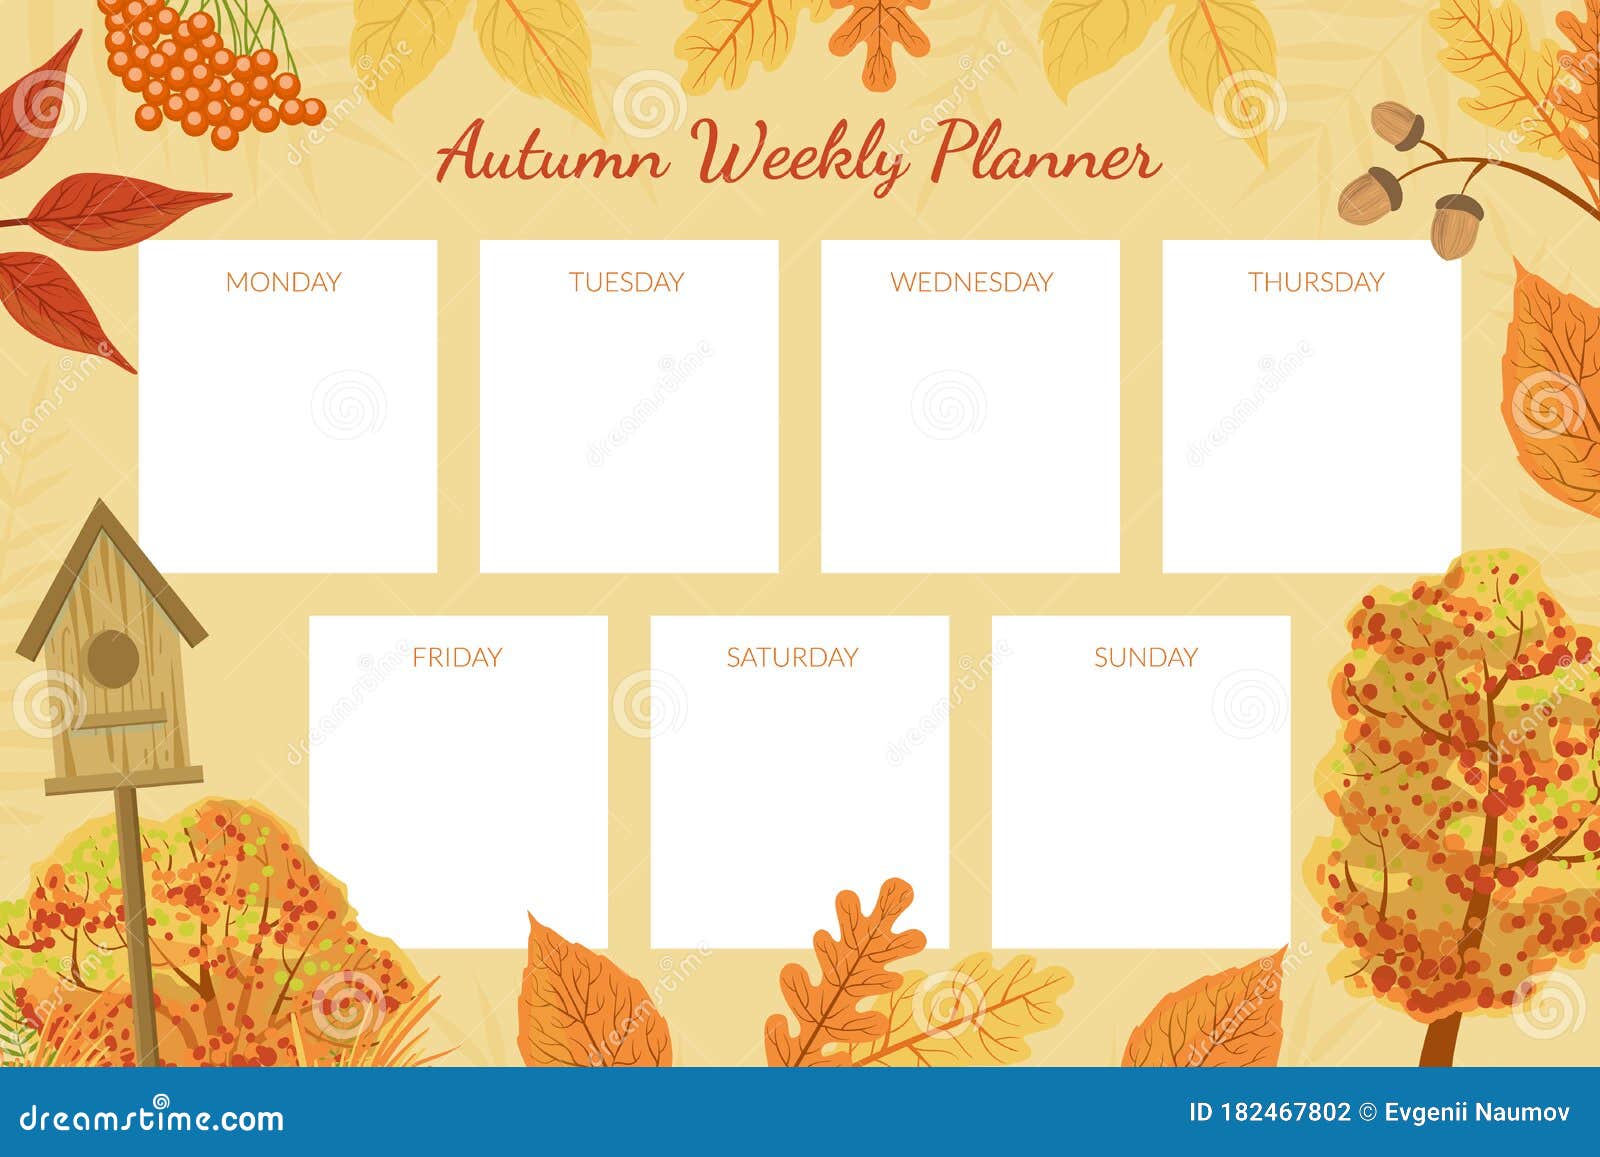 autumn-weekly-planner-template-week-calendar-schedule-with-bright